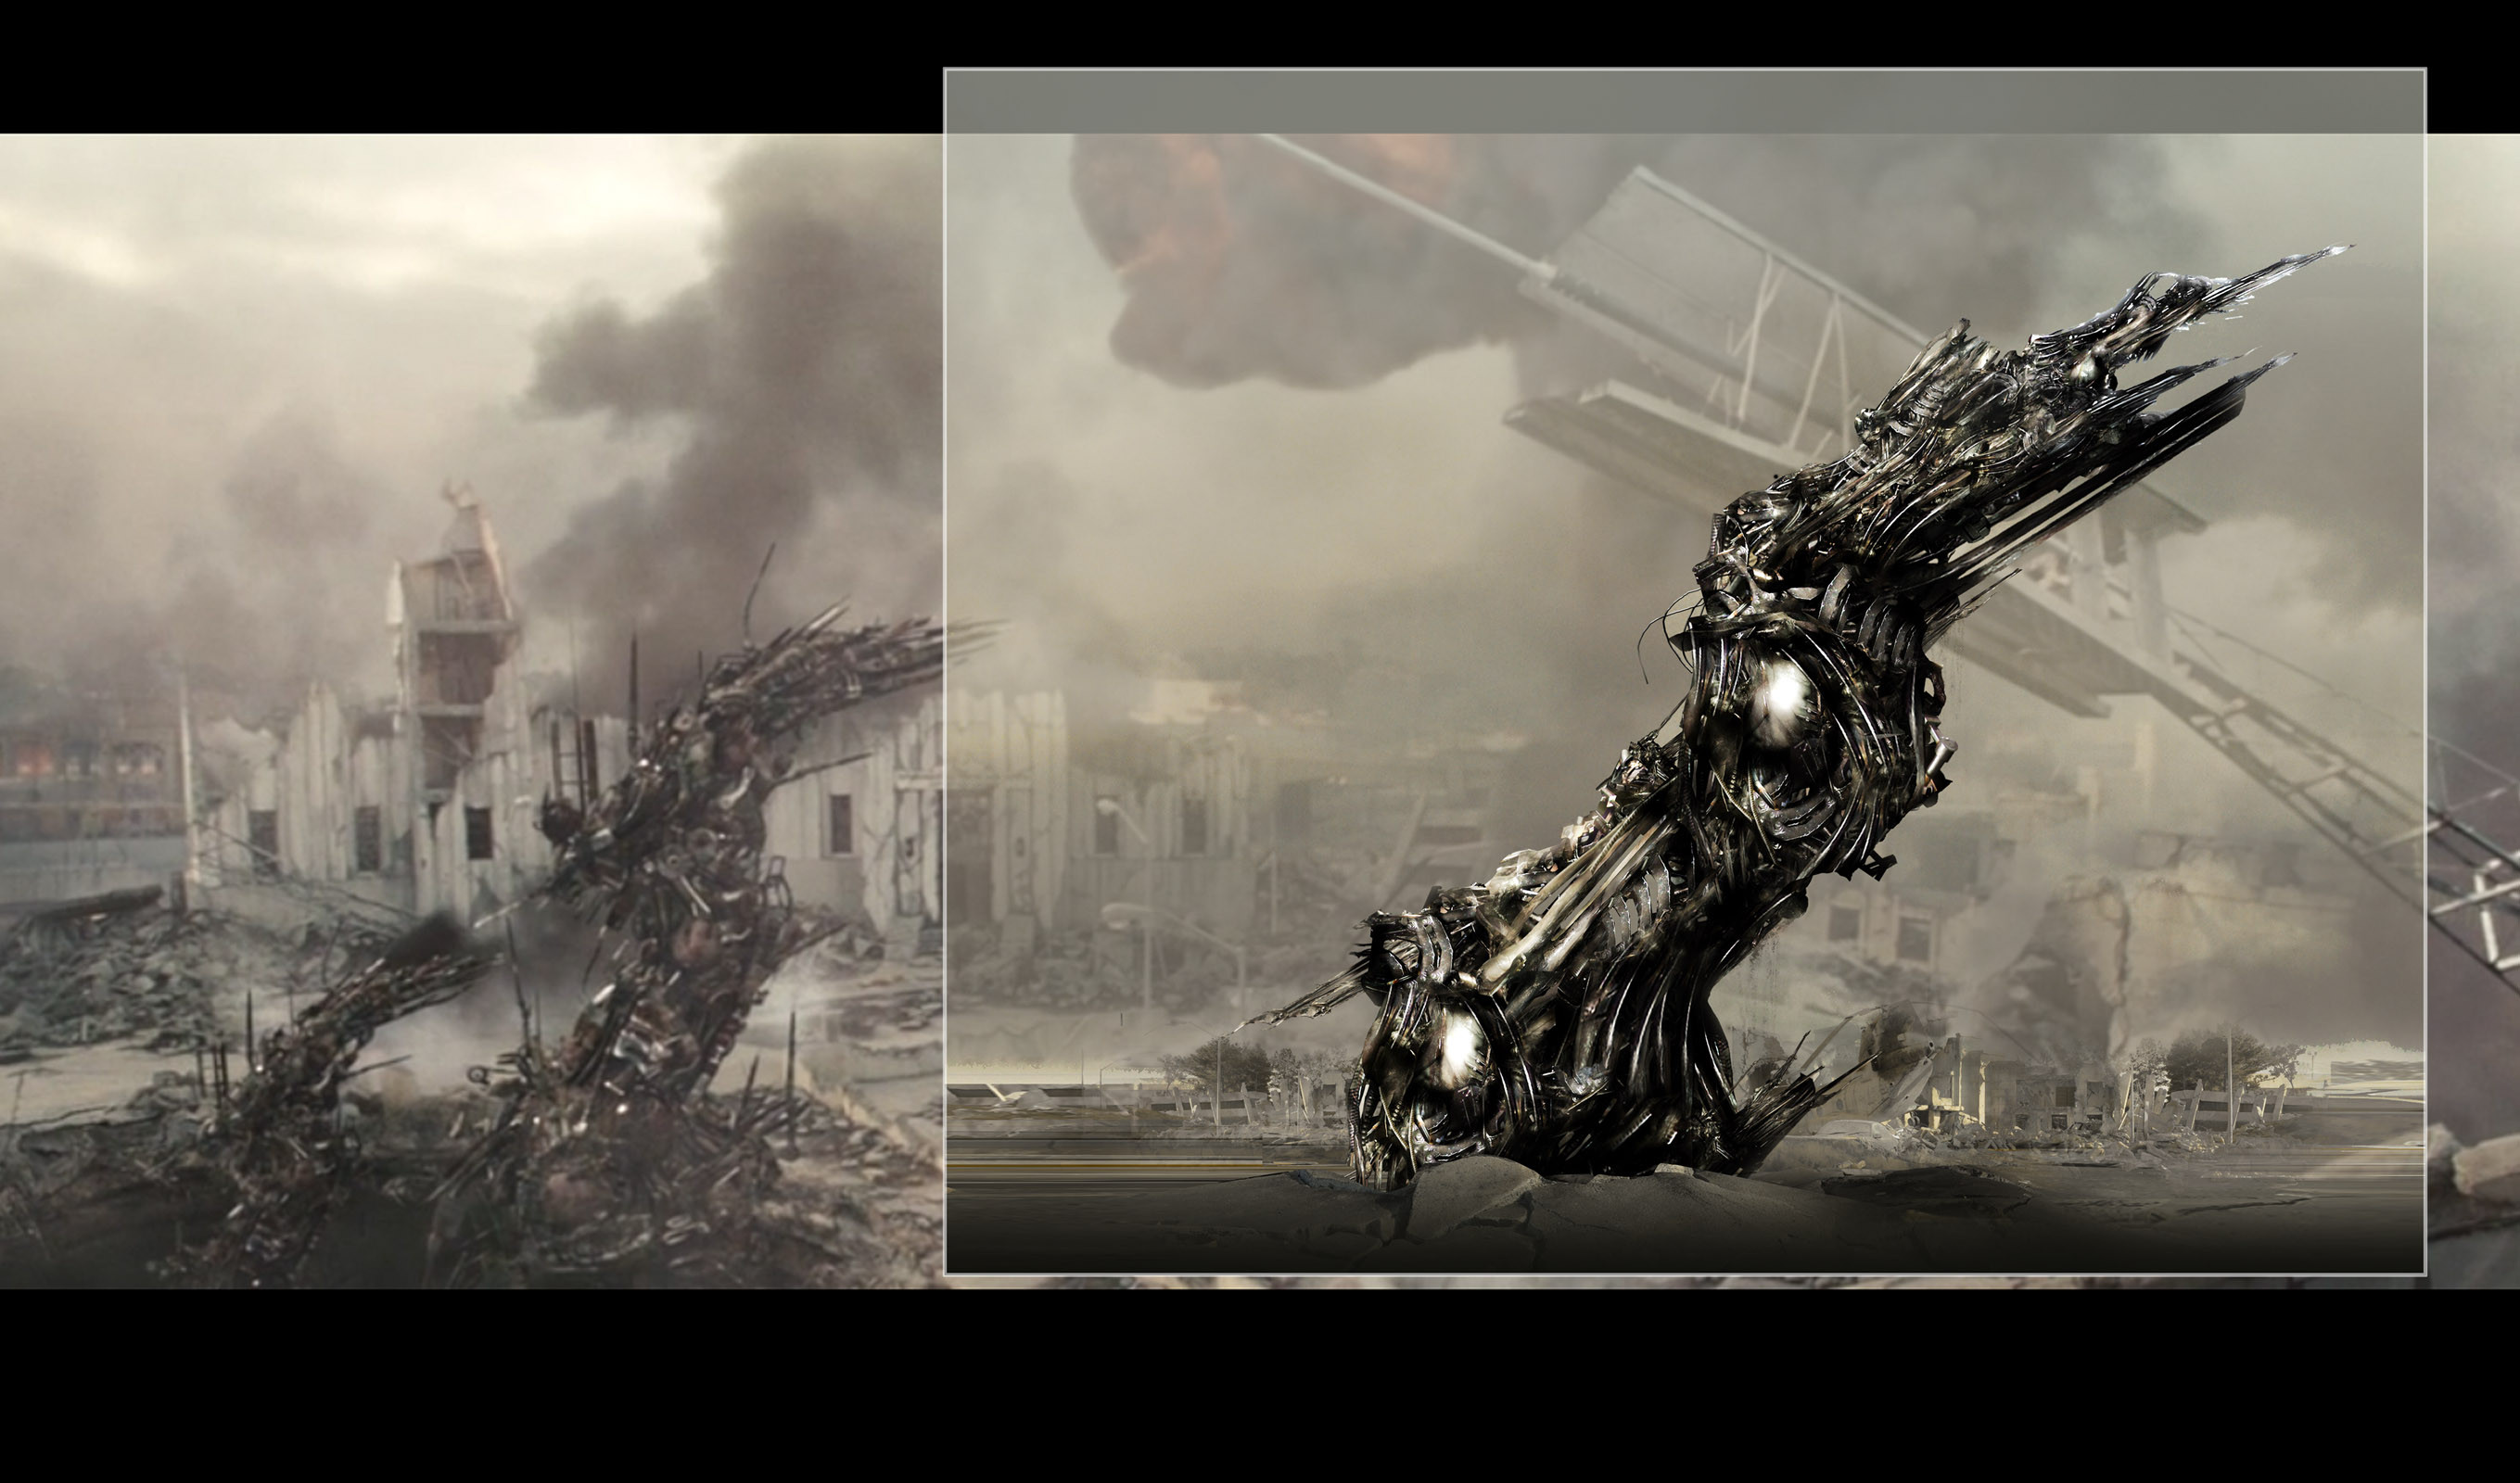 DESIGN - 2- SCREEN
Battle LA : Movie
Alien communication tower